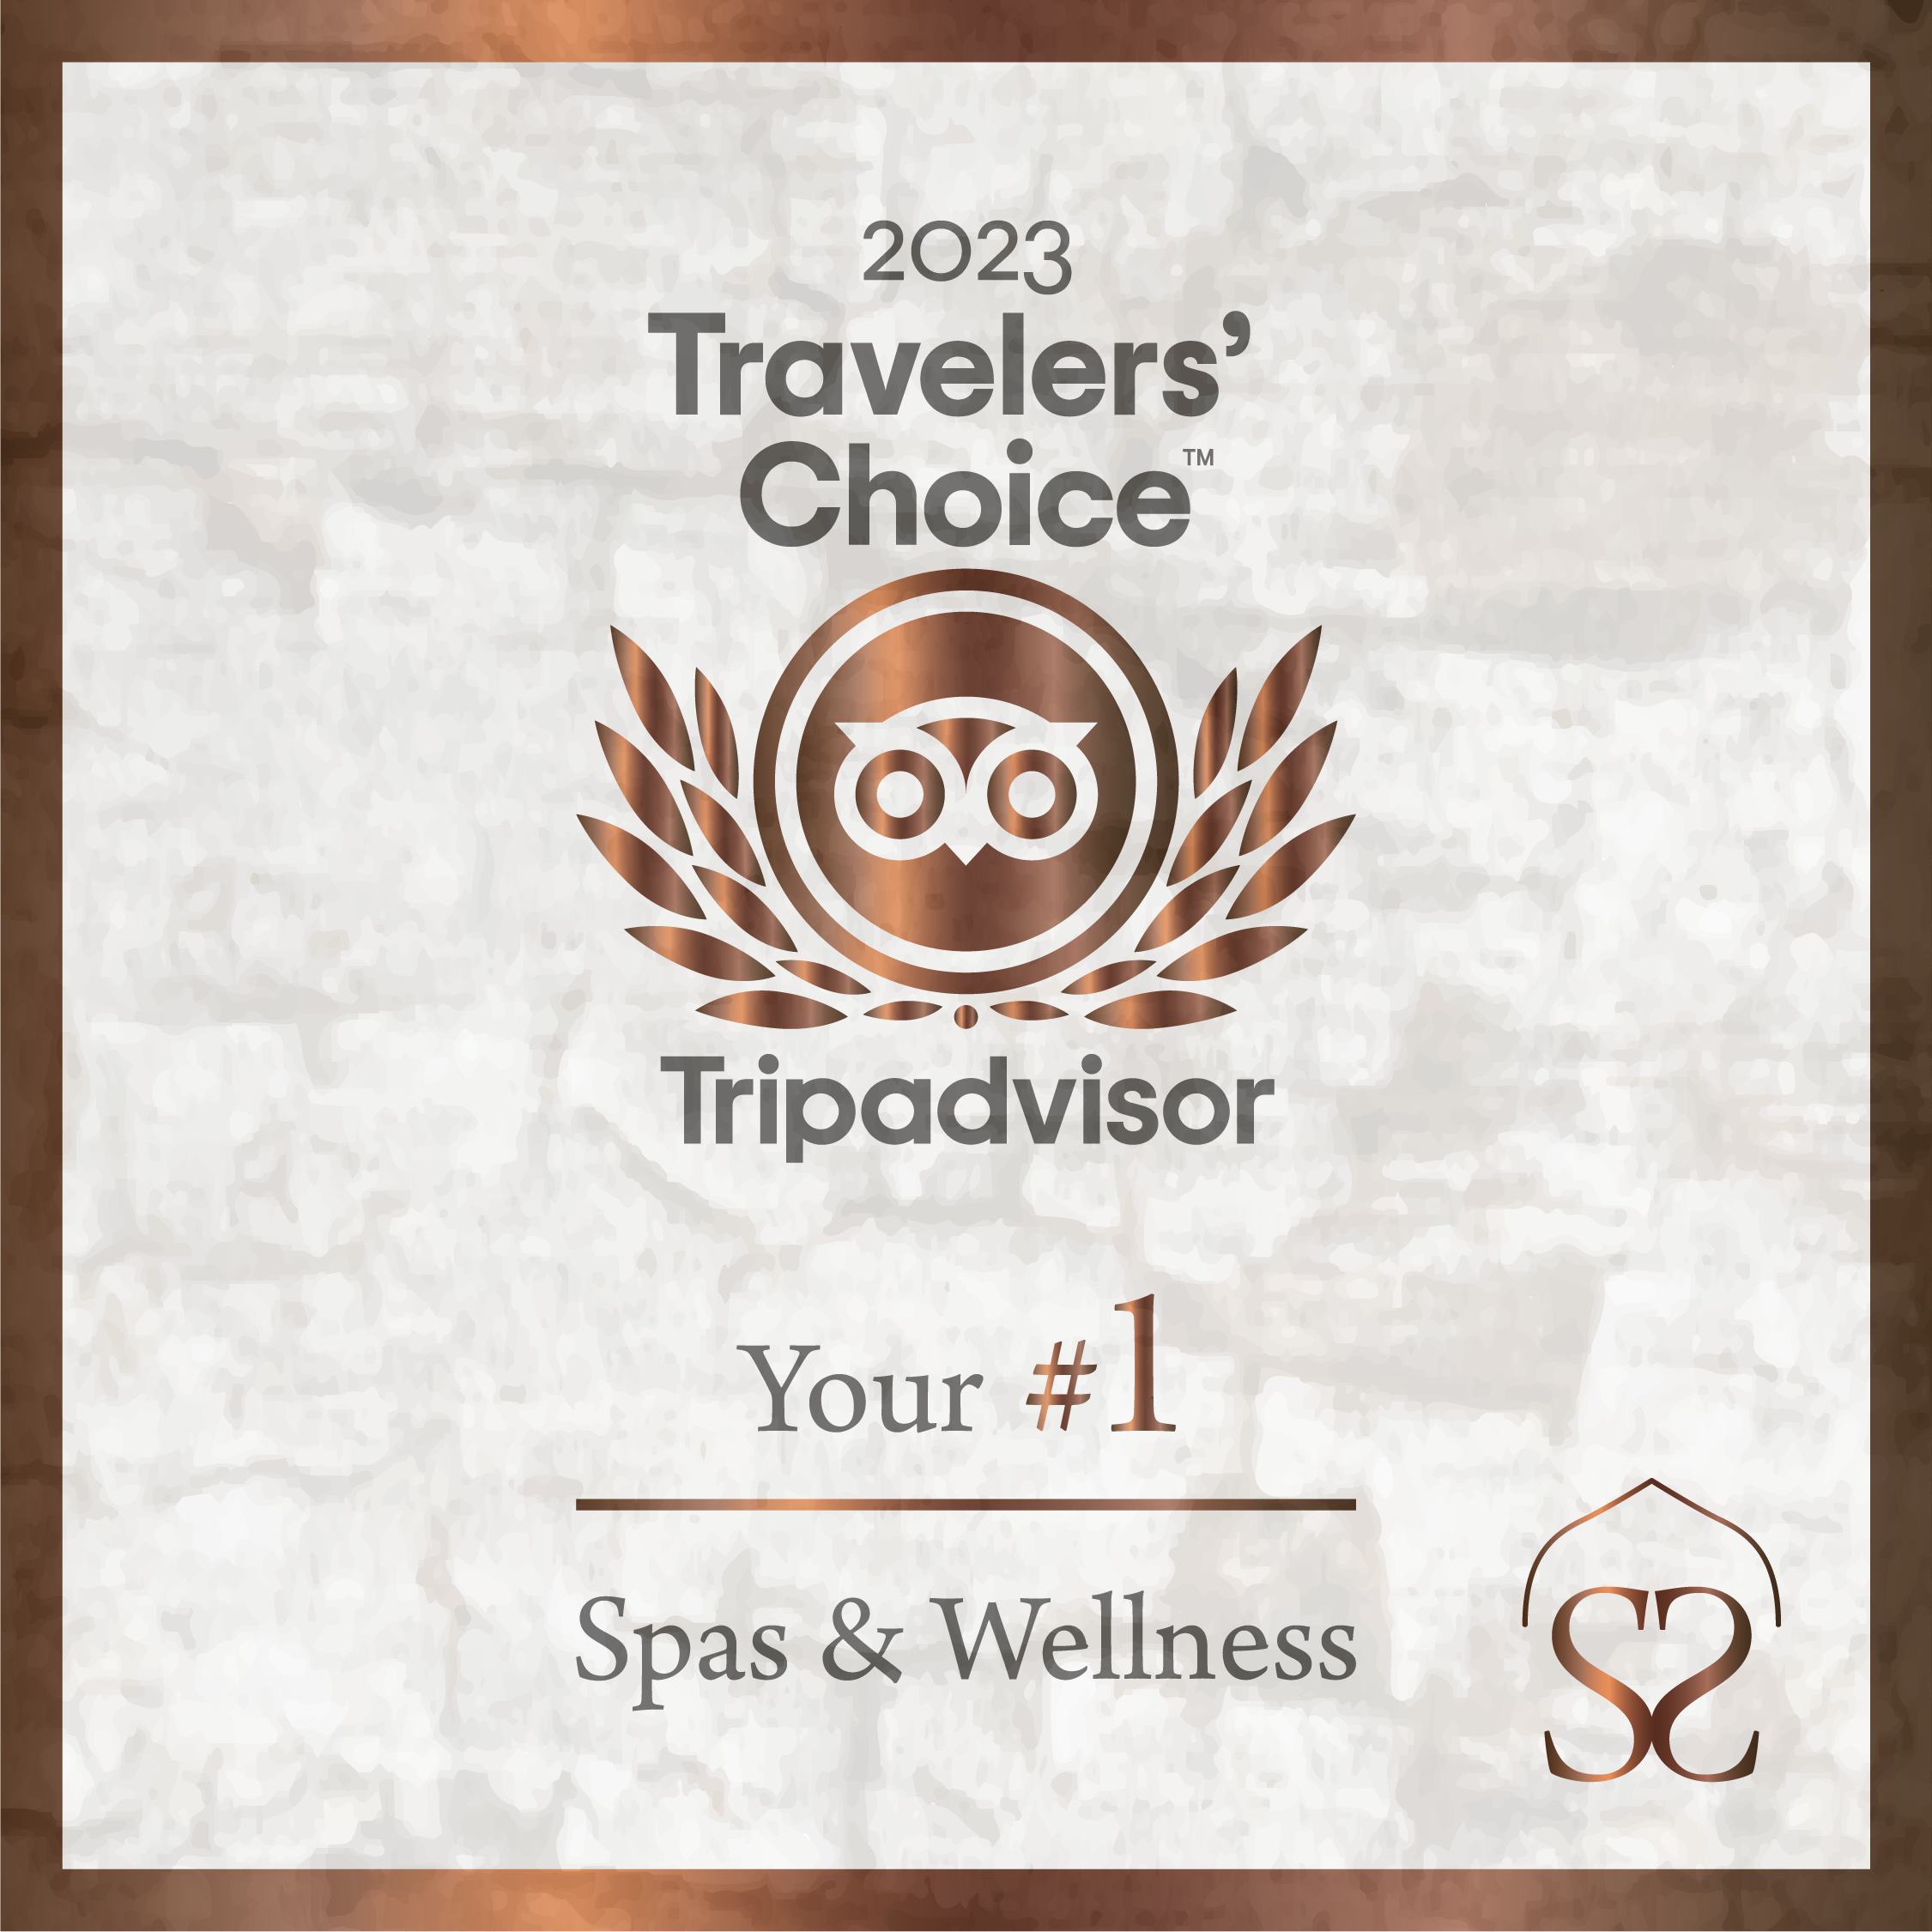 Sheldon Spa - Travellers' Choice - Number One - Tripadvisor - Spas & Wellness

